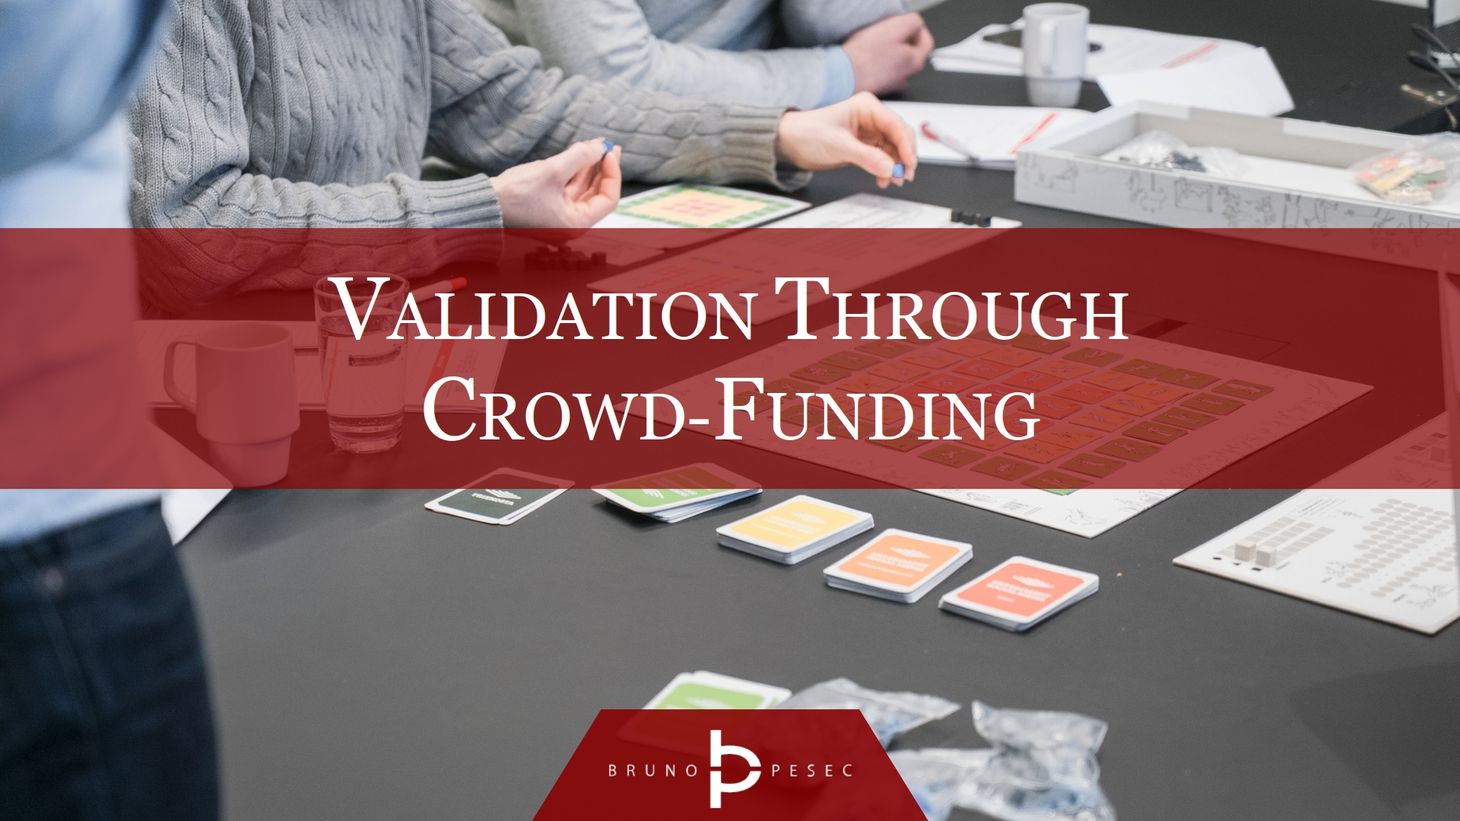 Validation through crowd-funding